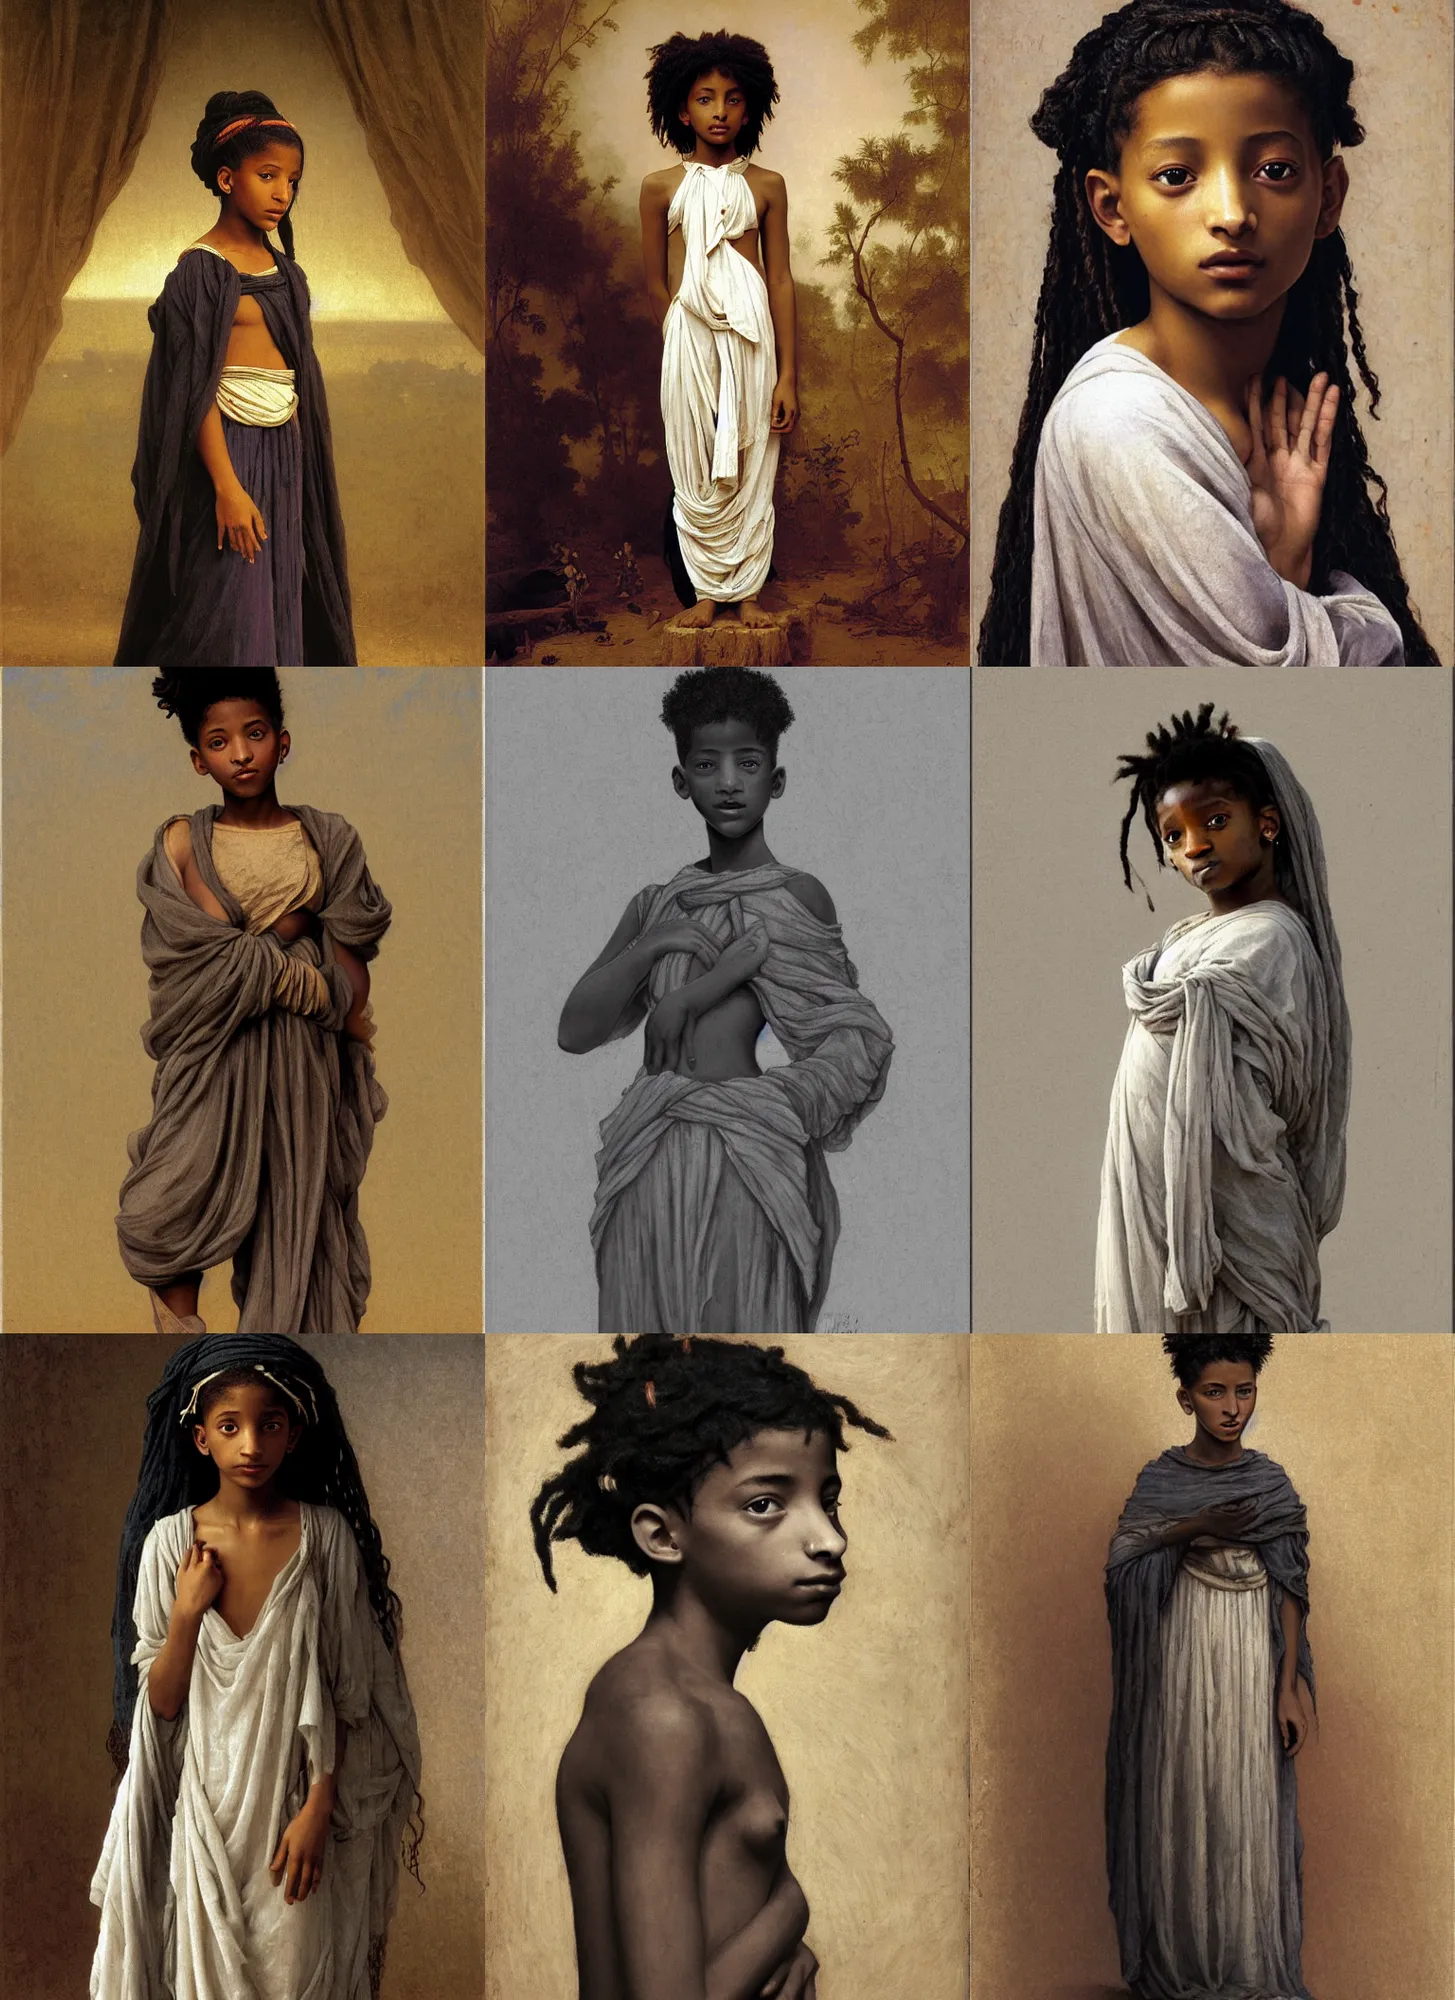 Prompt: willow smith as young libyan girl, full body, symetrical, grey background, intricate, sharp focus, illustration, orientalism, bouguereau, rutkowski, jurgens